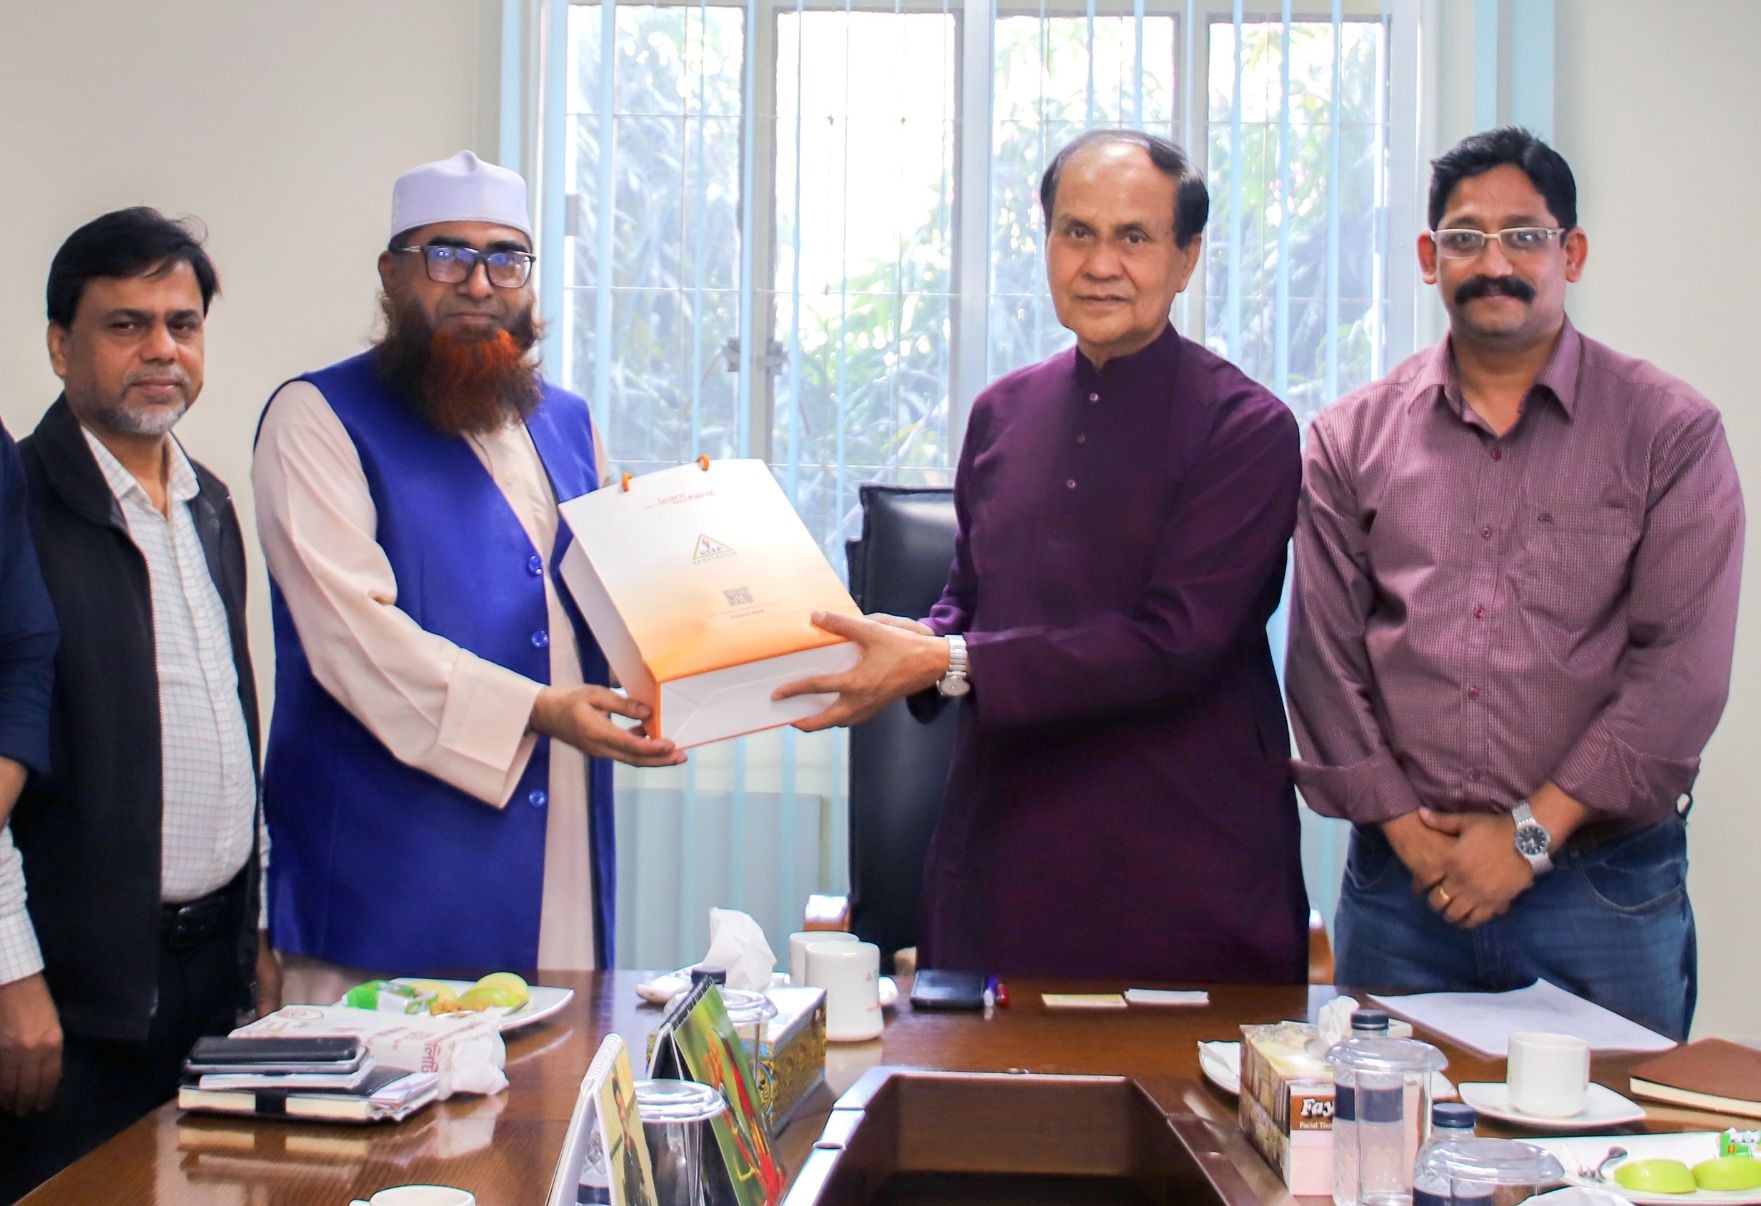 Islamic scholar Sheikh Shah Mohammad Wali Ullah Visited UCEP Bangladesh